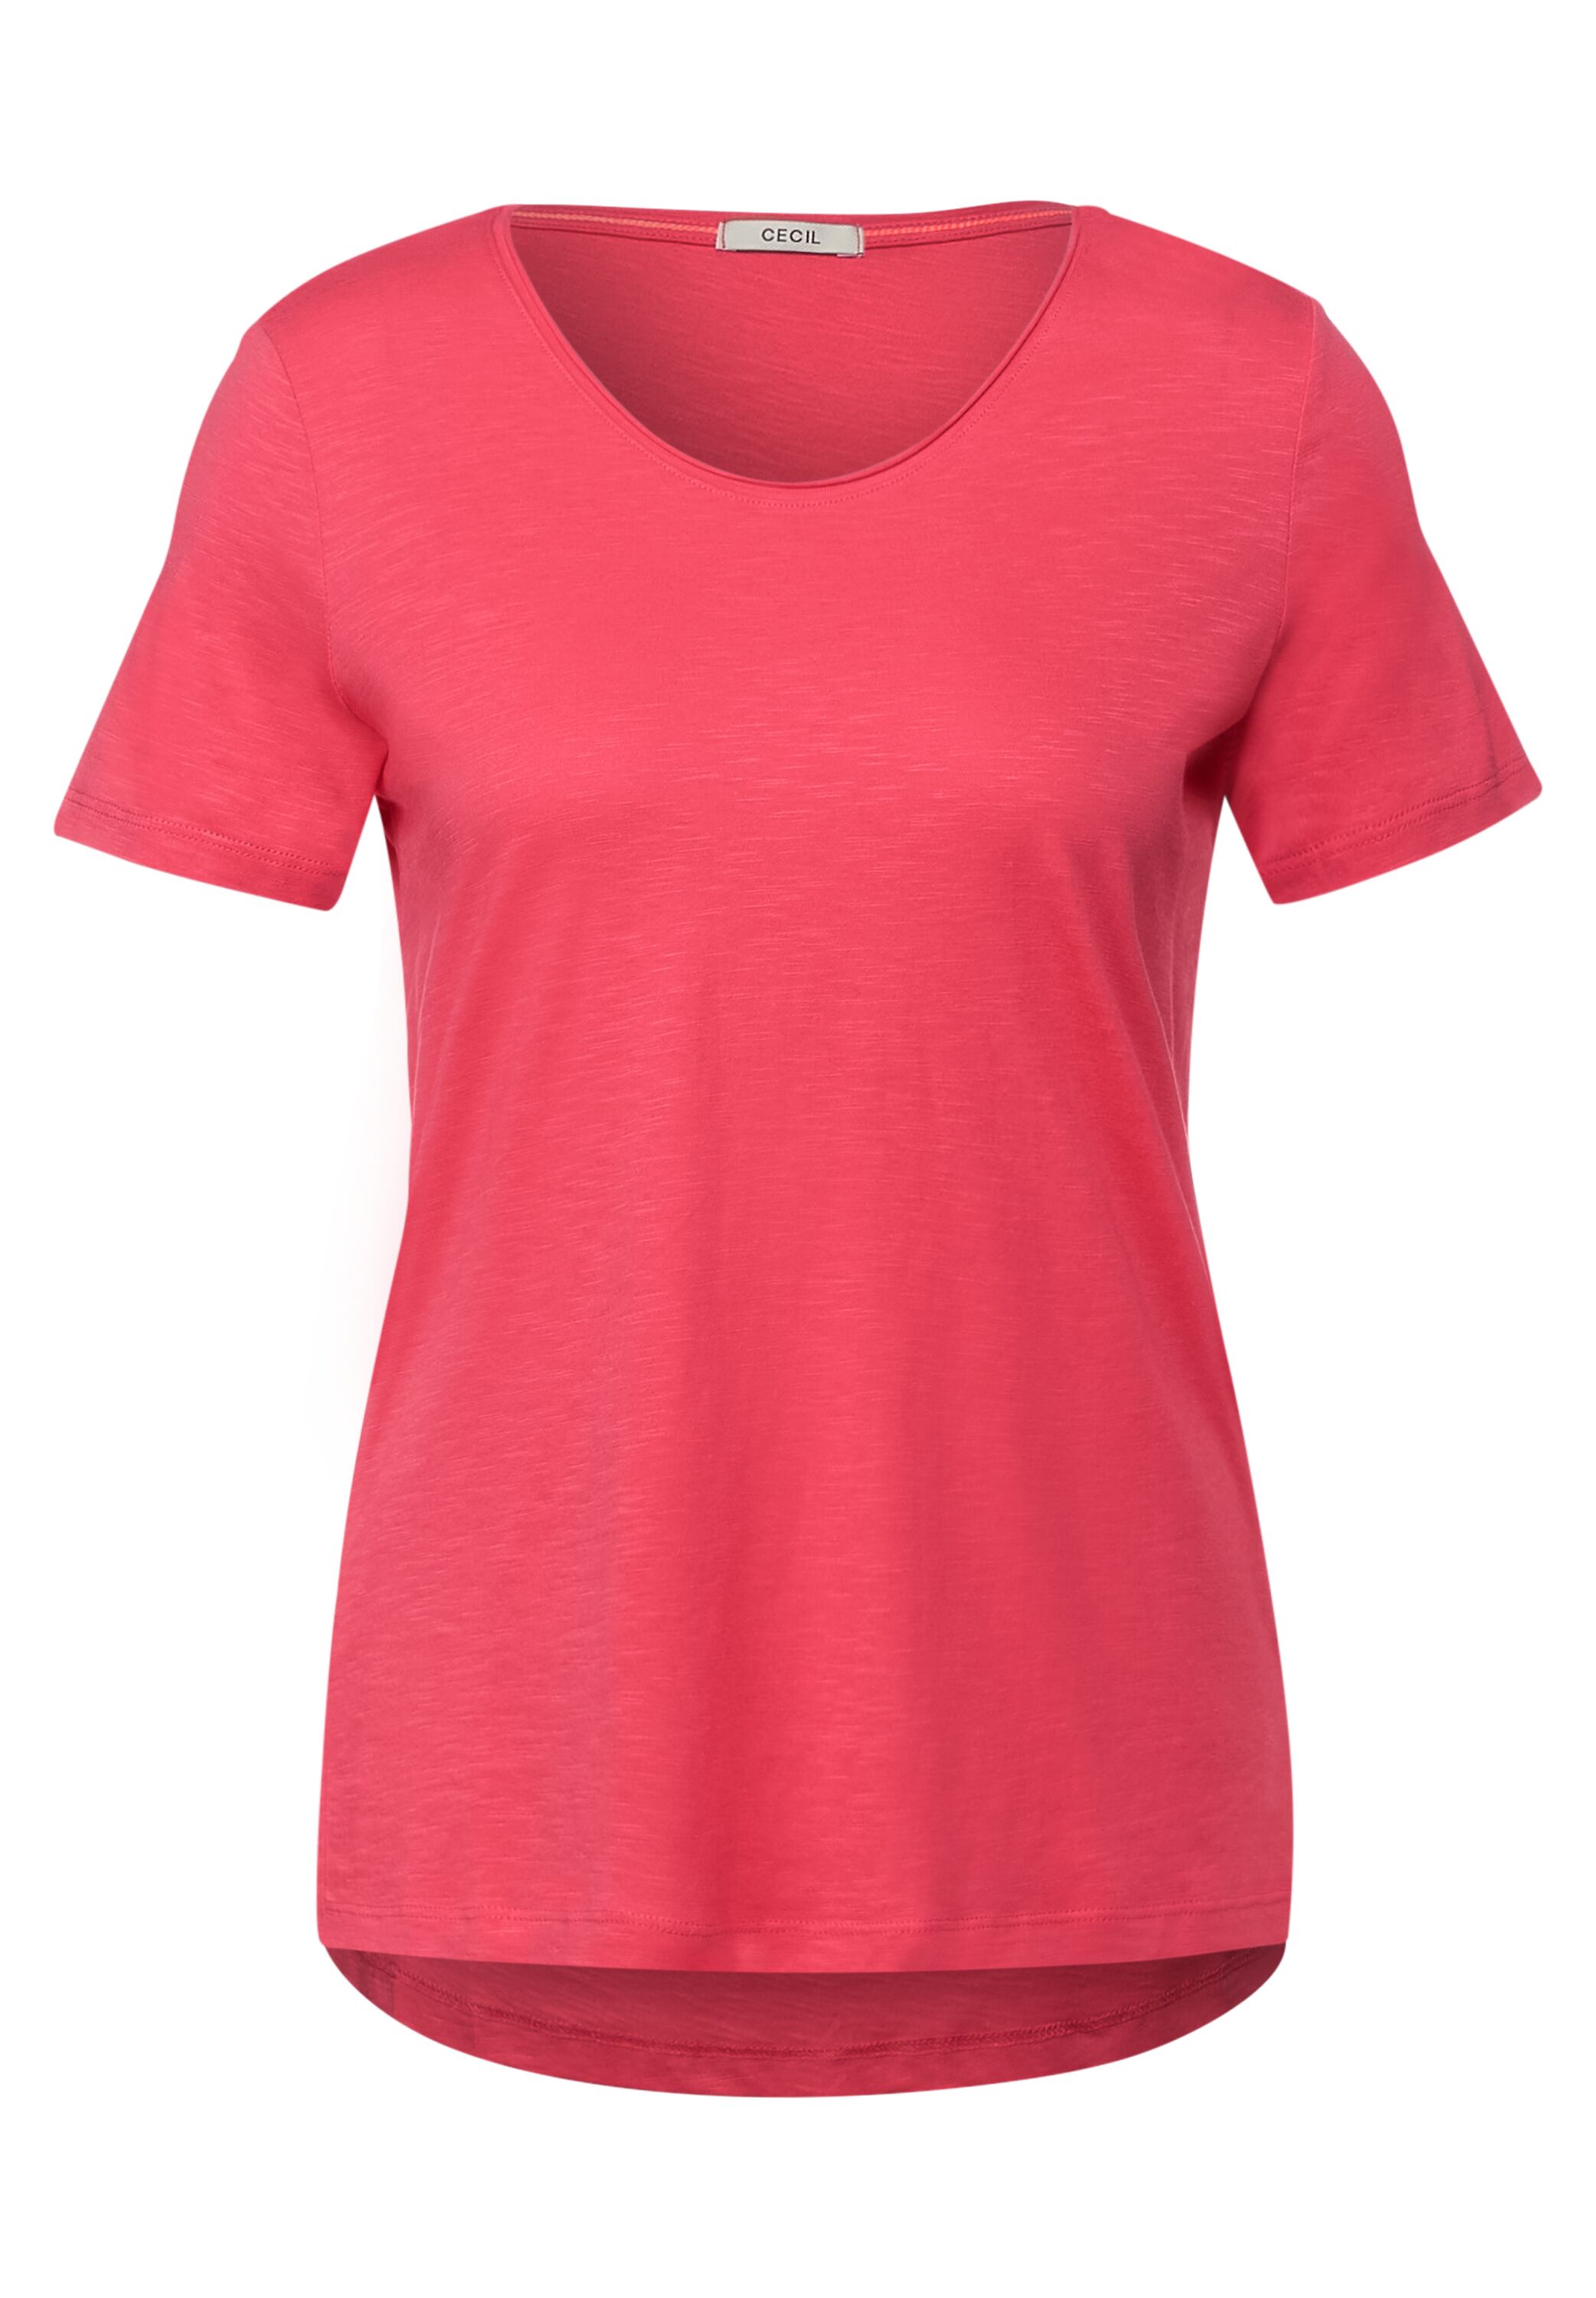 CECIL T-Shirt in Sunset Coral im SALE reduziert B317596-13796 - CONCEPT Mode